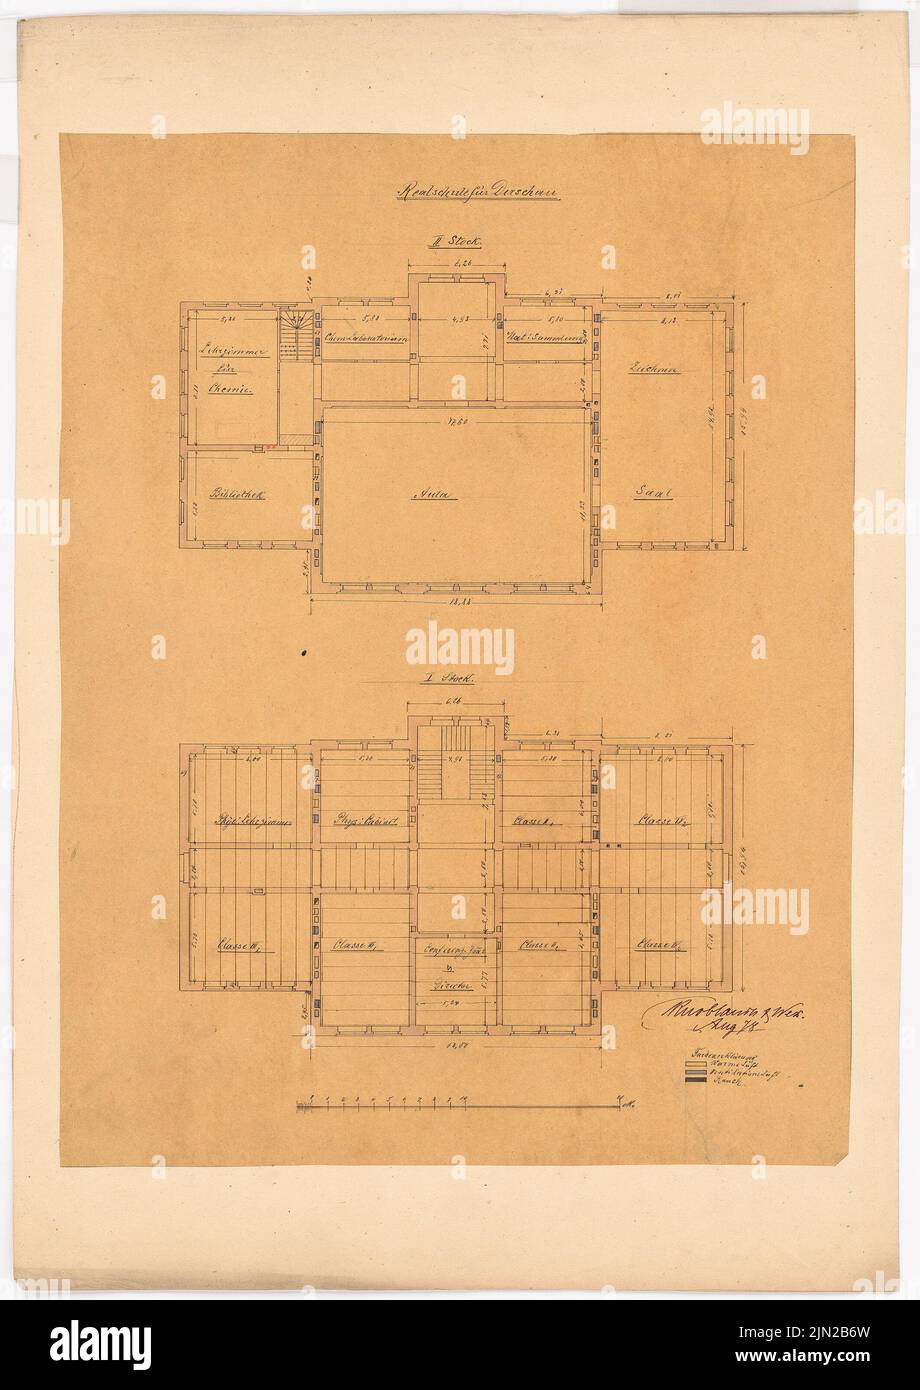 Knoblauch & Wex, Realschule, Dirschau: floor plan 1st floor, 2nd floor. Tusche watercolor on transparent on paper, 67.3 x 47.6 cm (including scan edges) Stock Photo